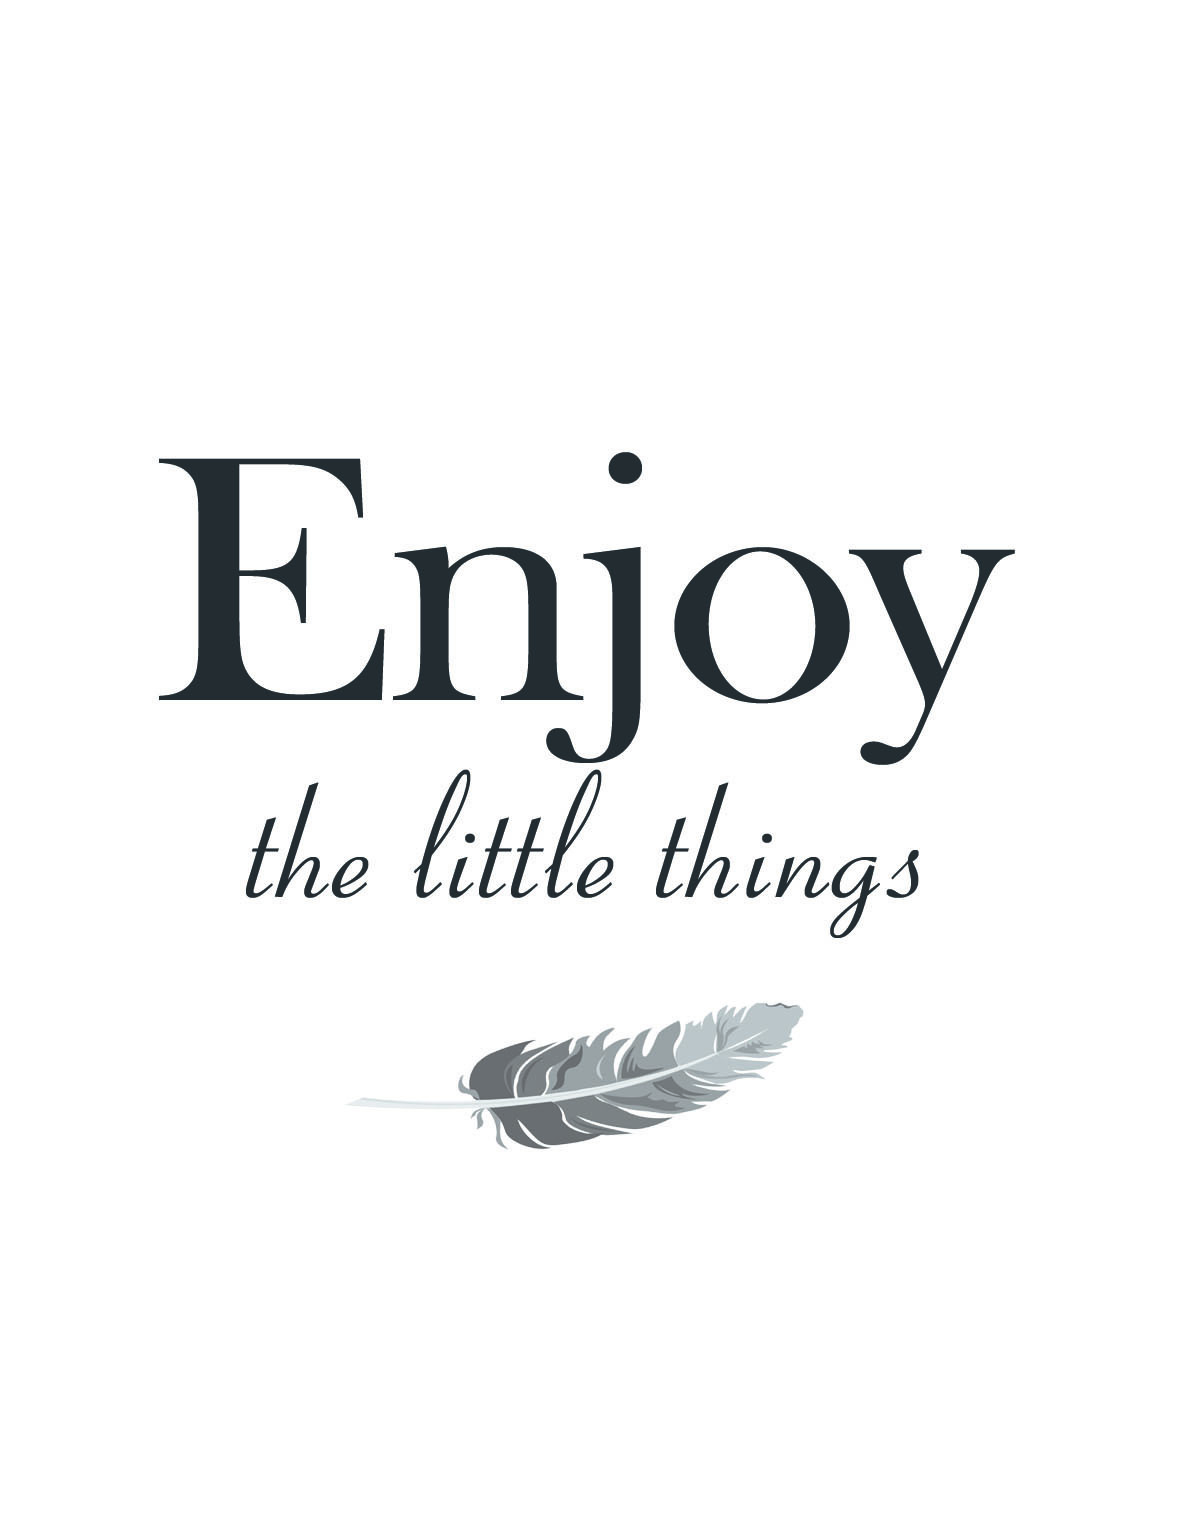 Kunstdruck auf Leindwand: Enjoy the little things